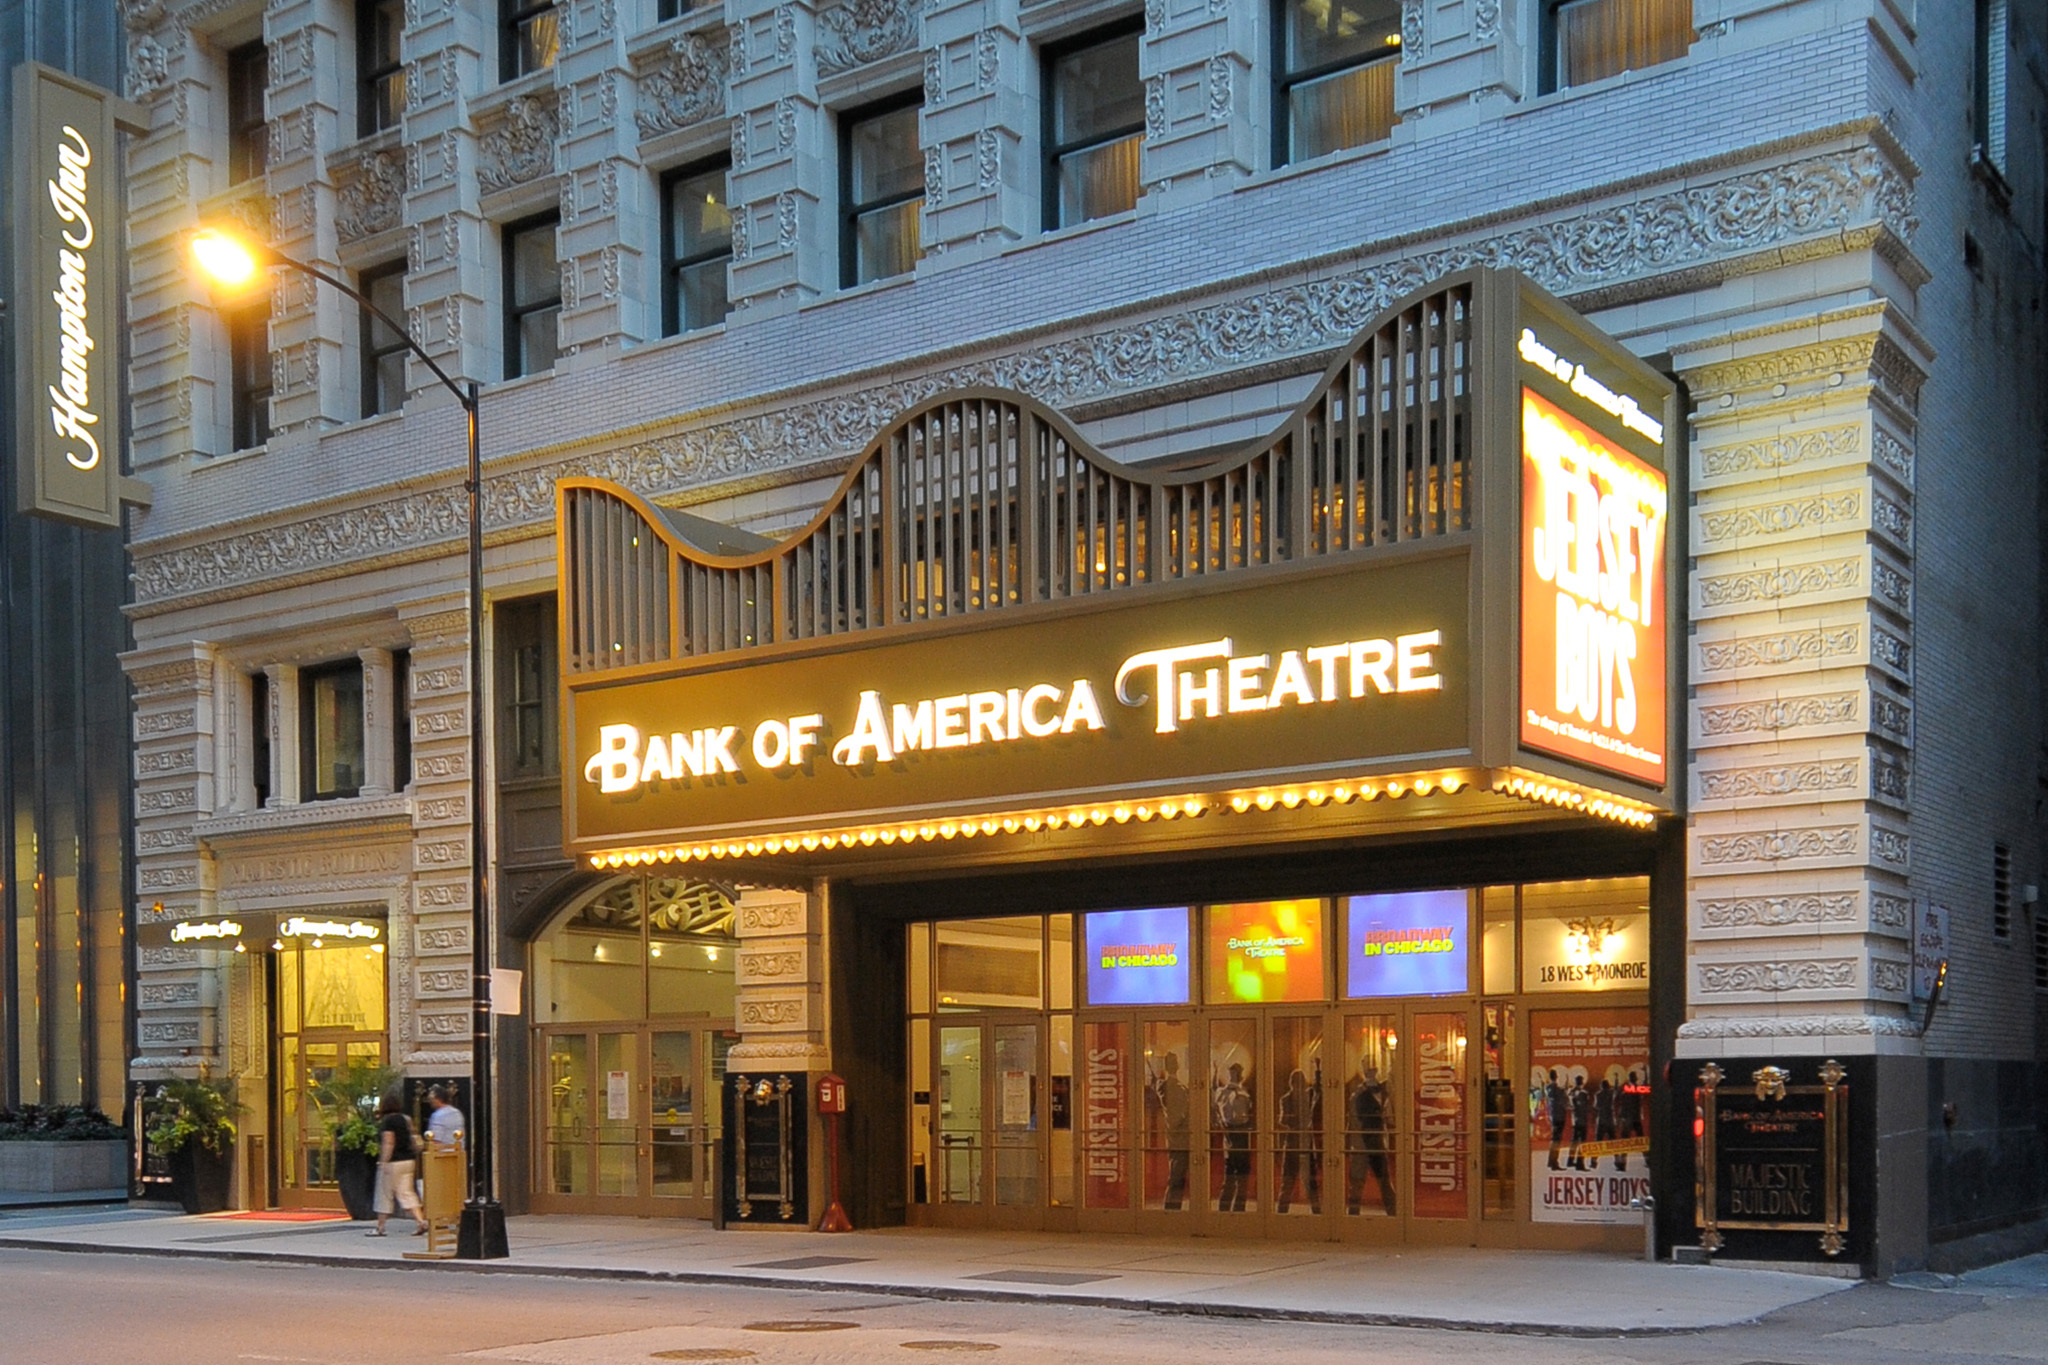 Travel theater. Бродвейский театр Чикаго. Театр метрополитен опера в Нью-Йорке. Театры с США здание. American Ballet Theatre здание.